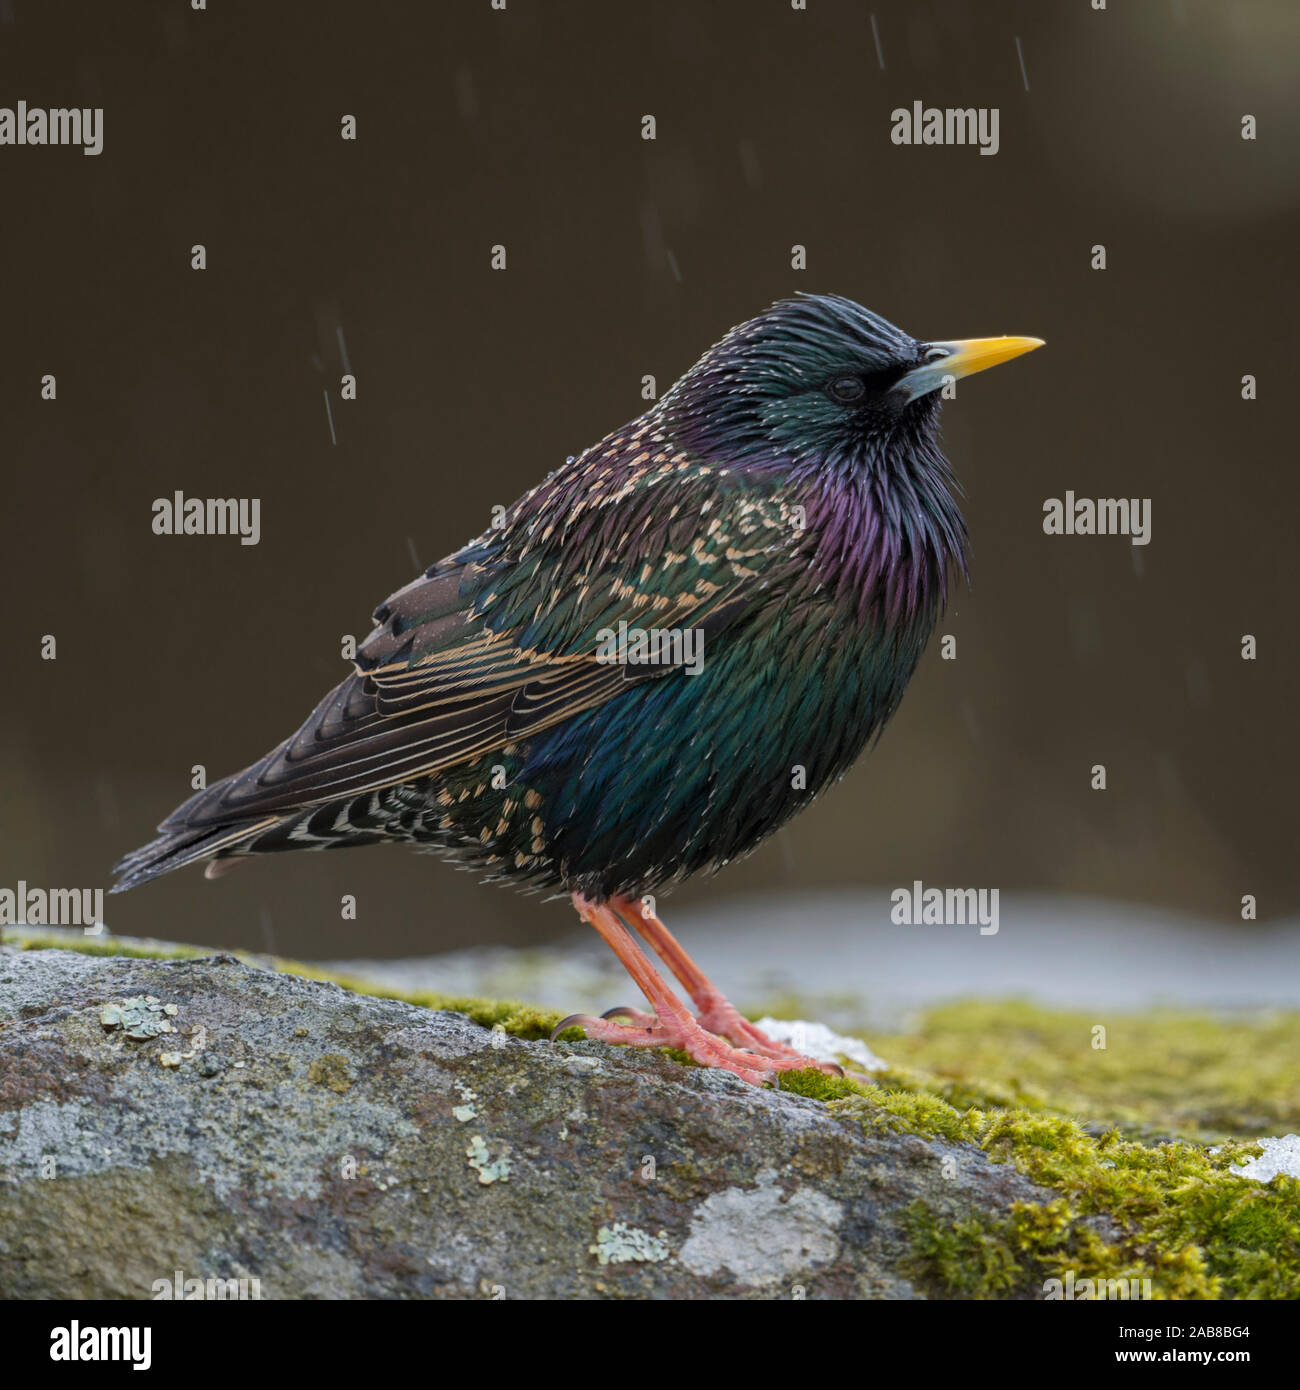 Common starling / Star ( Sturnus vulgaris ) adult in its breeding dress, perched on a rock in rain, nice metallic shimmering plumage, in Spring, Europ Stock Photo